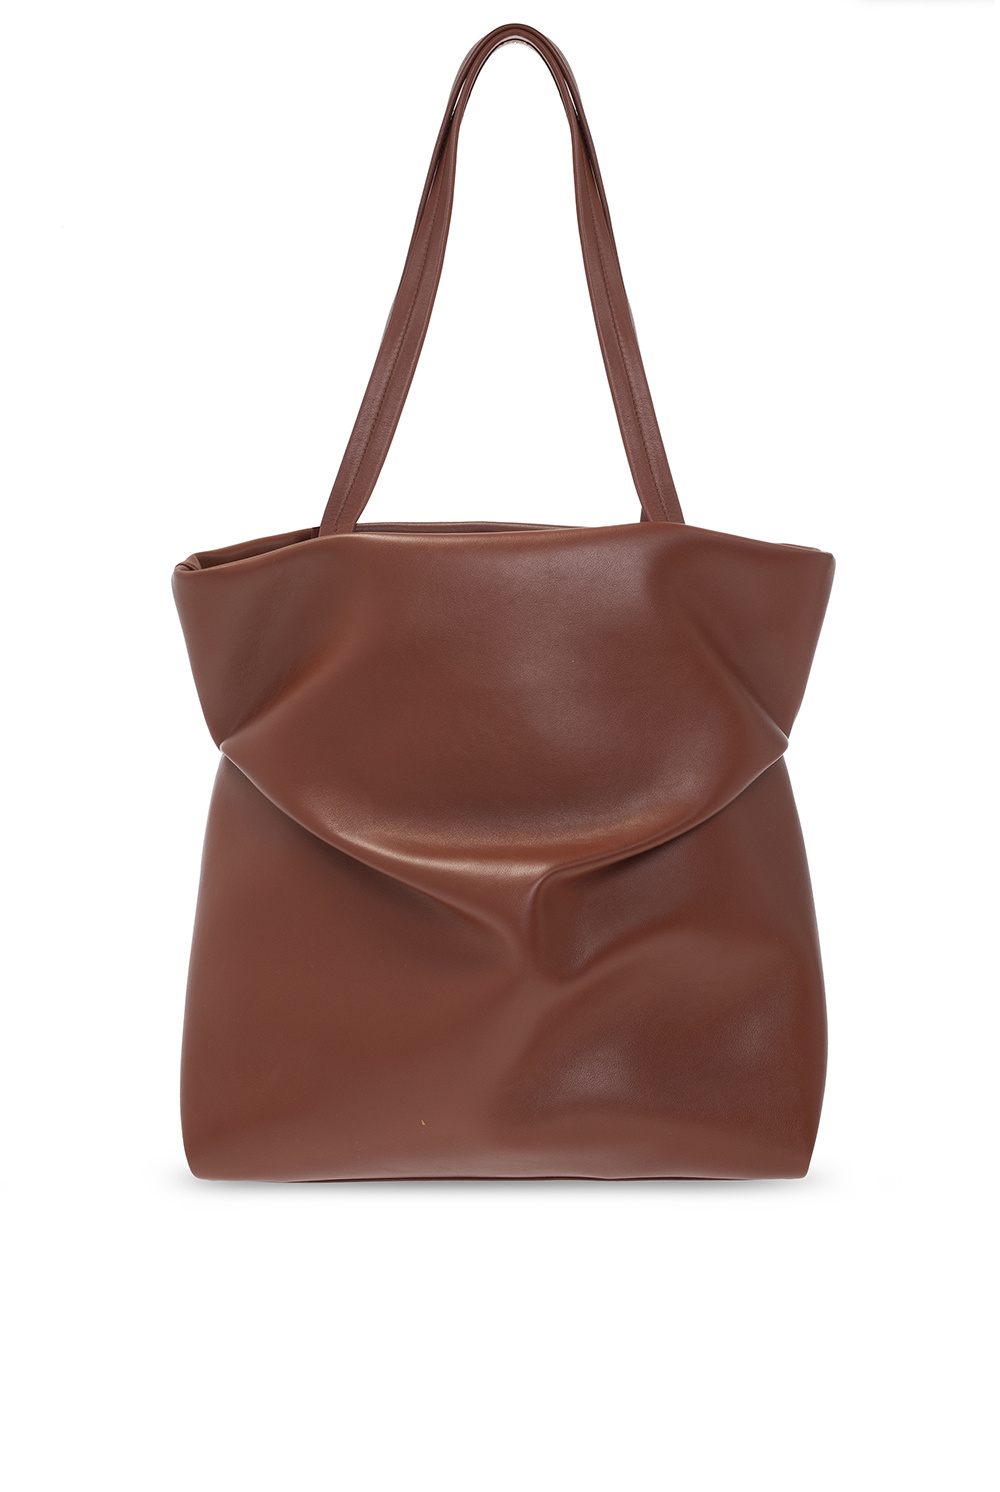 Chloé 'Judy Tote' shopper bag